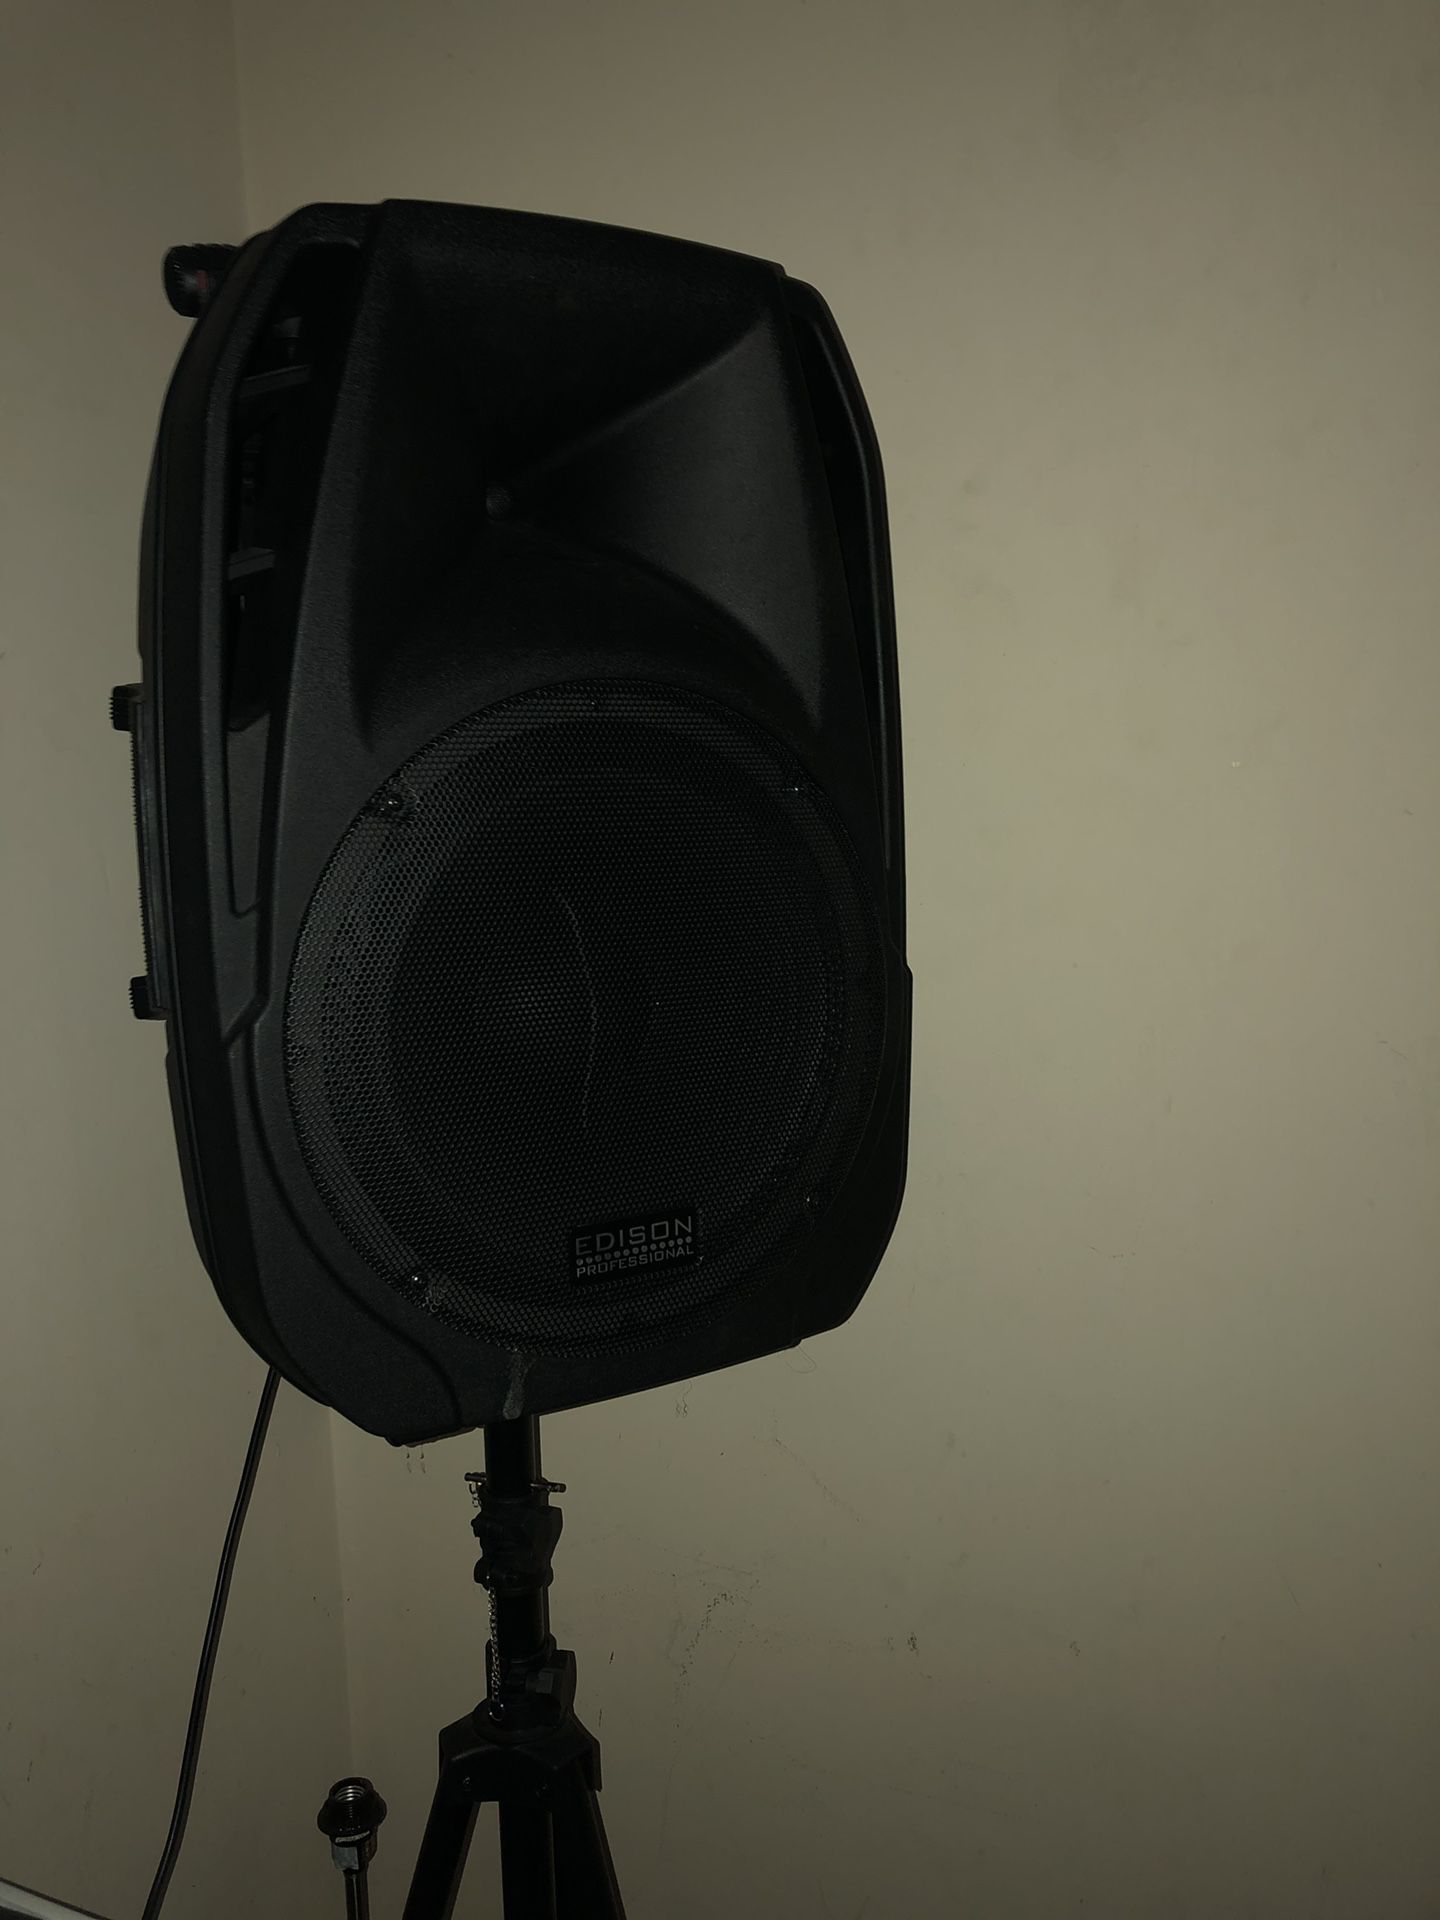 Edison professional Bluetooth speaker m2000